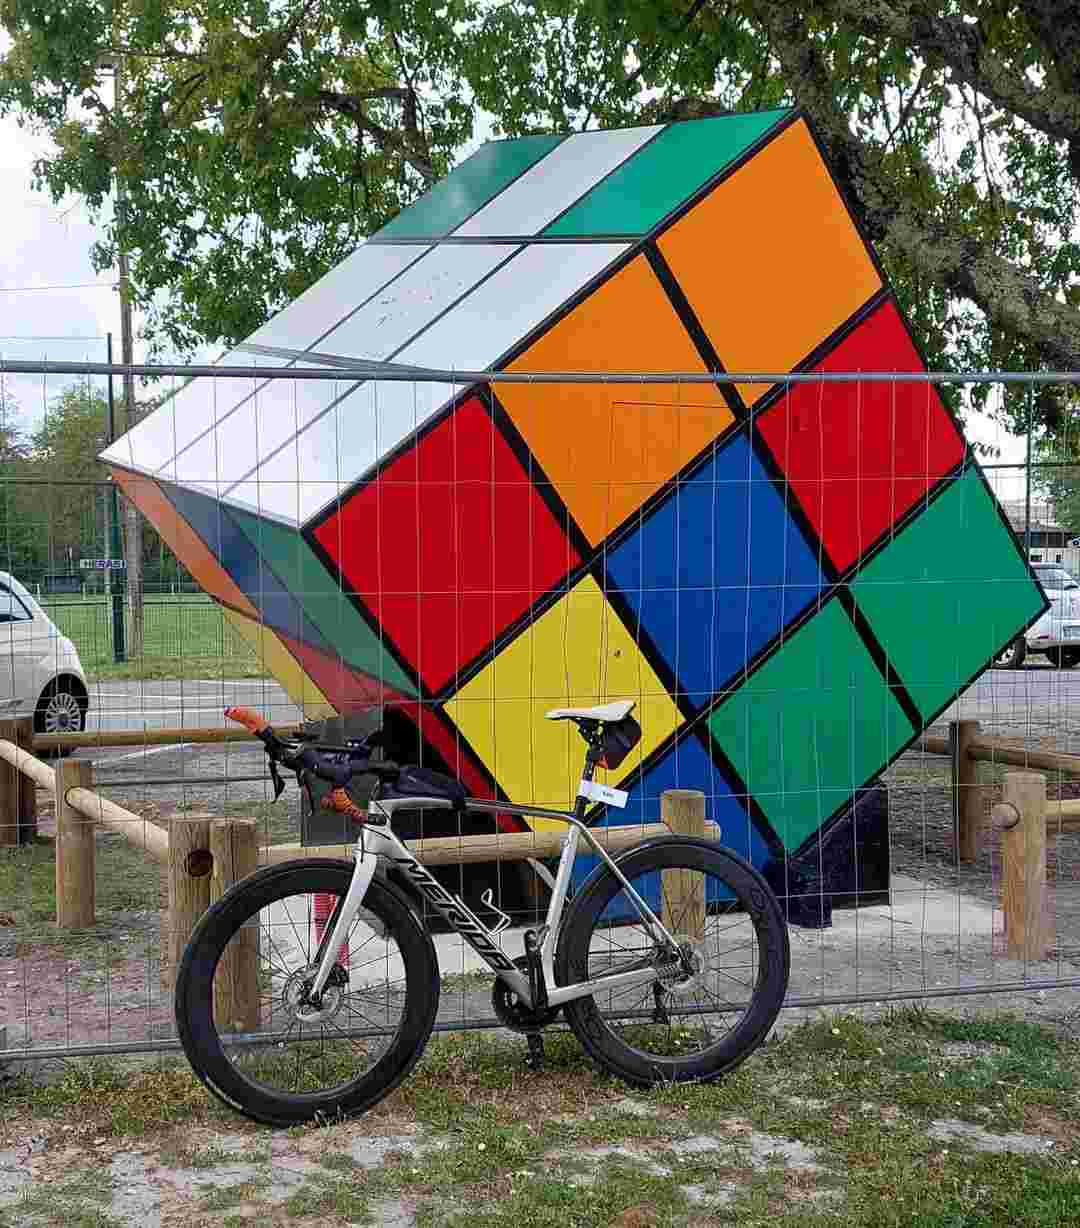 A MERIDA Road Bike Meets a Giant Rubik’s Cube Sculpture